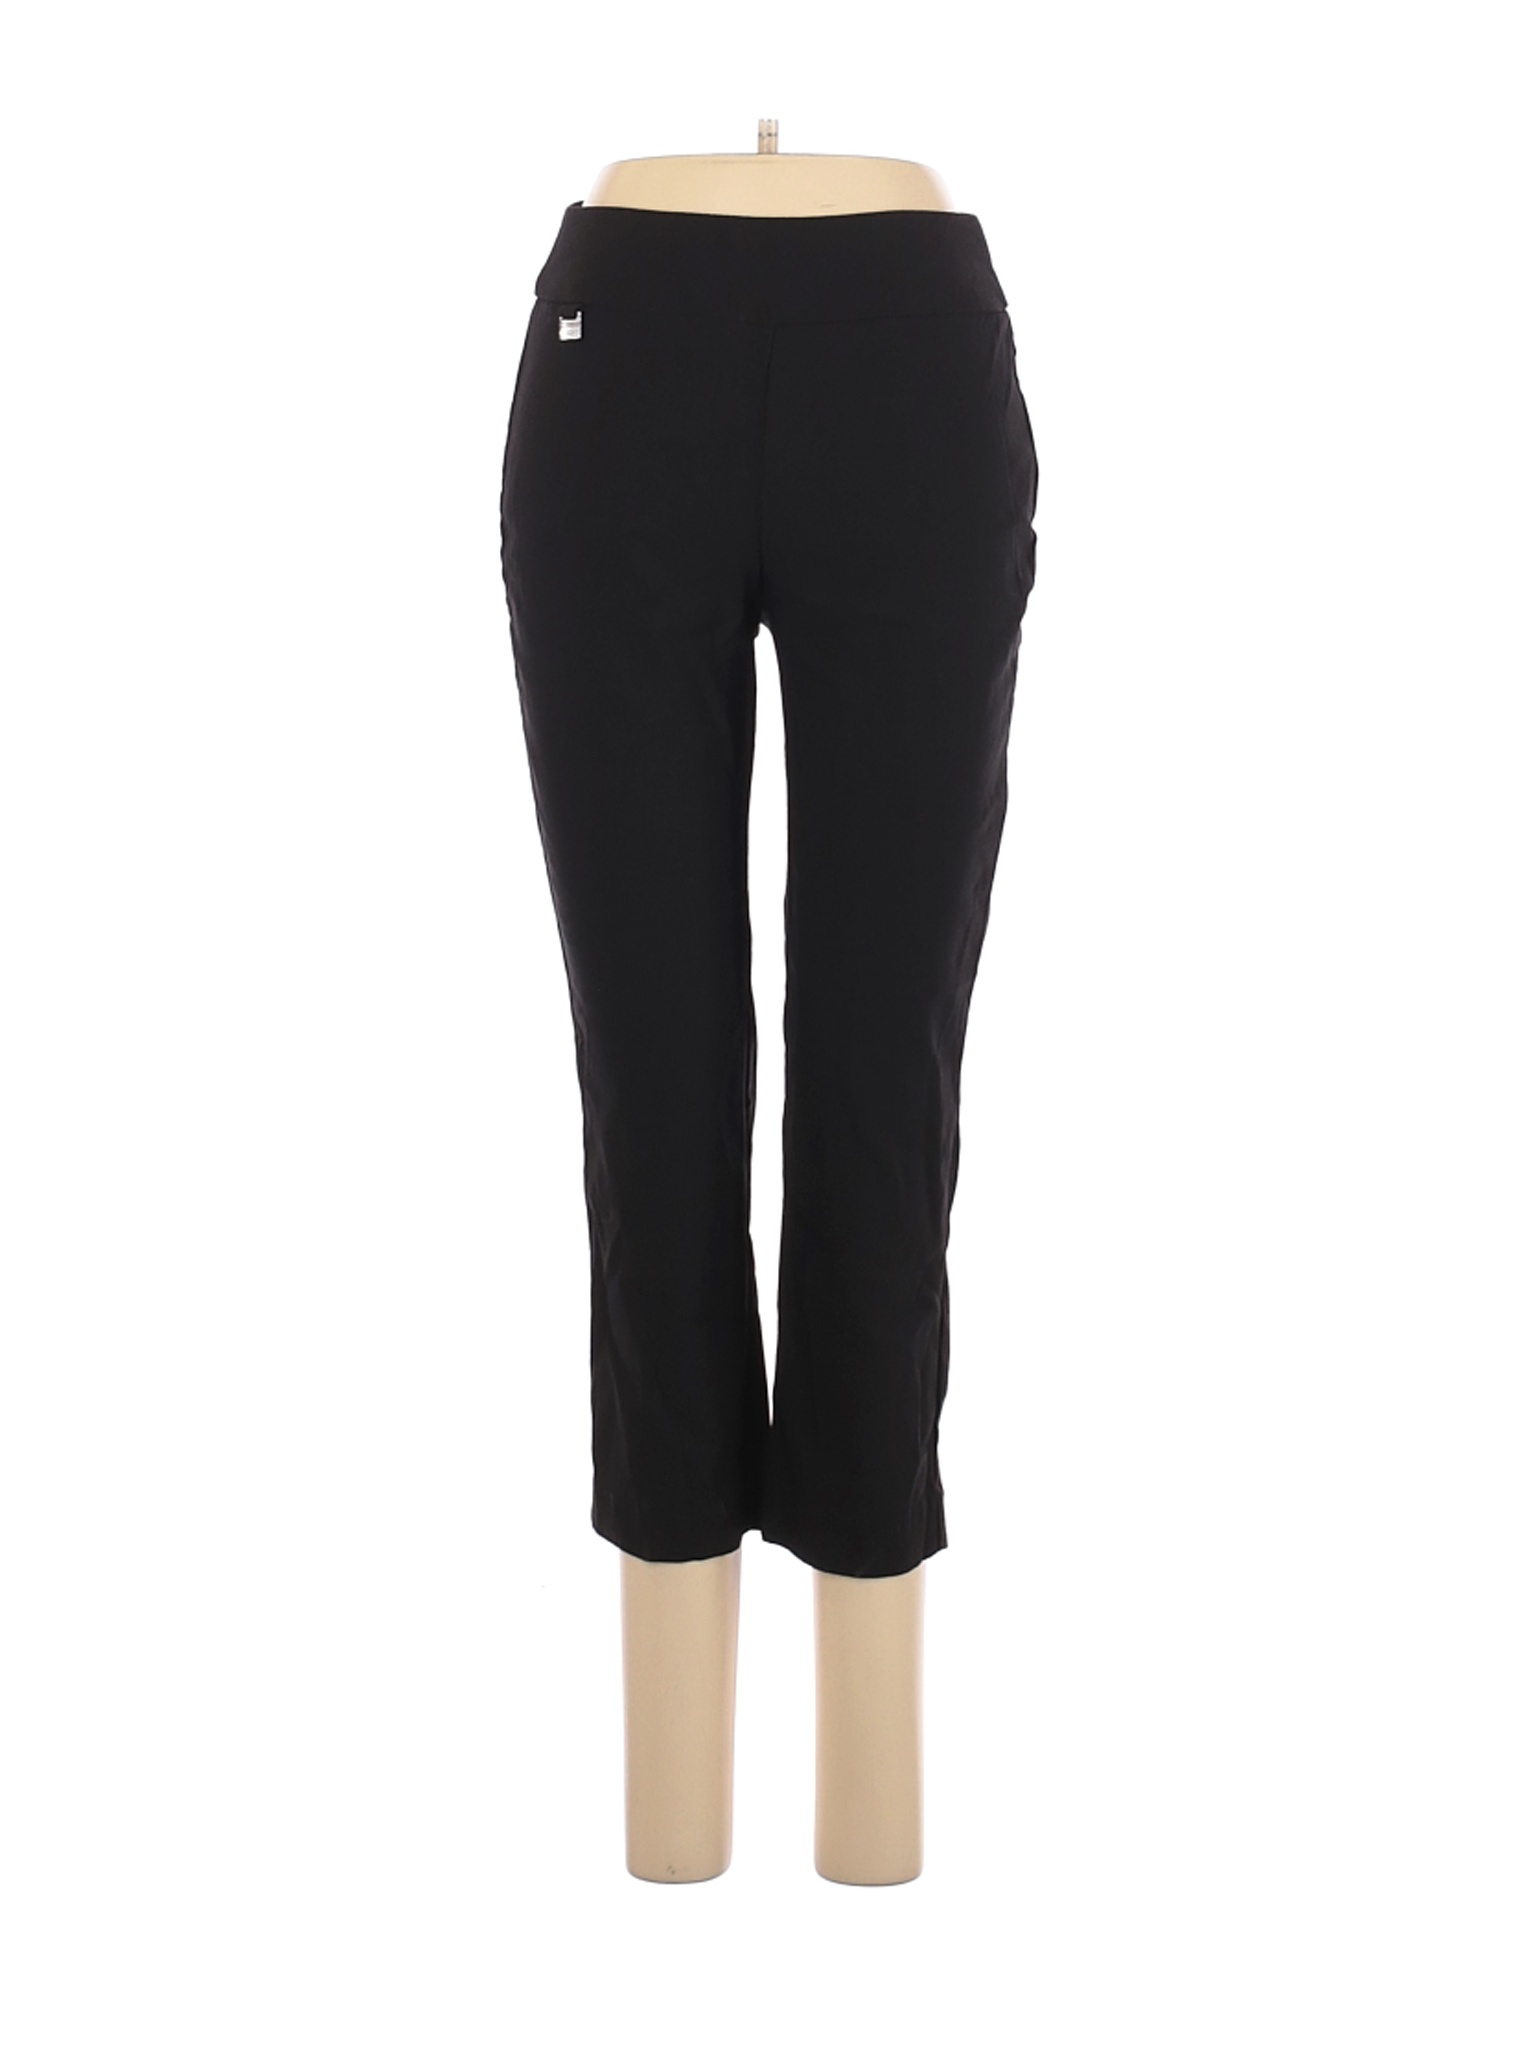 Philosophy Republic Clothing Women Black Dress Pants XS | eBay